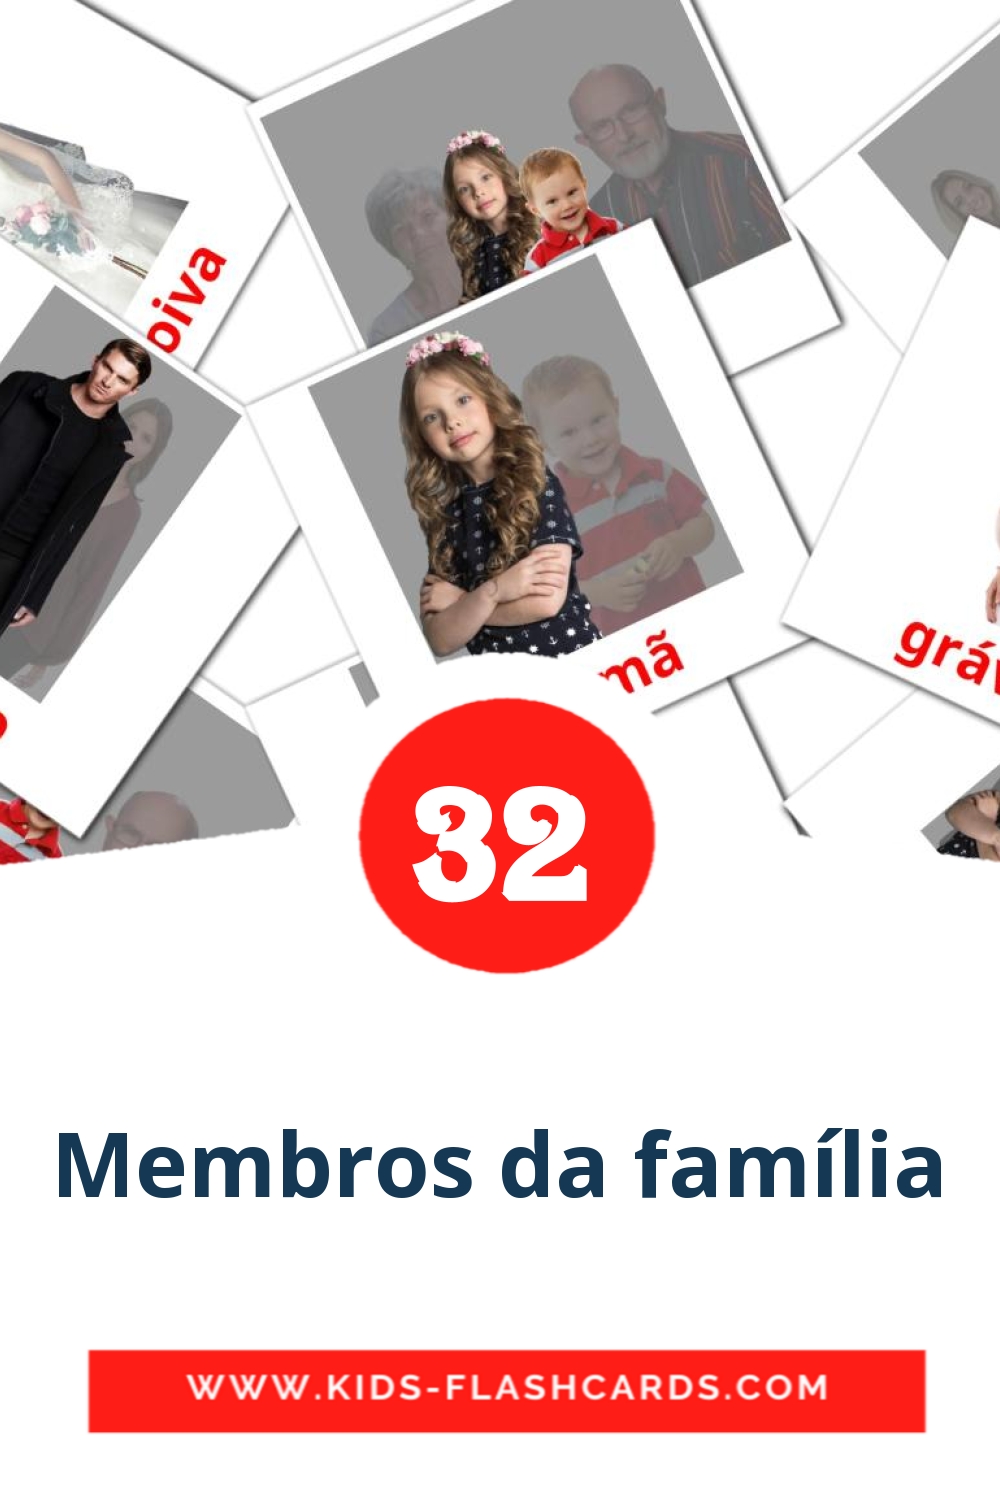 32 carte illustrate di Membros da família per la scuola materna in portoghese